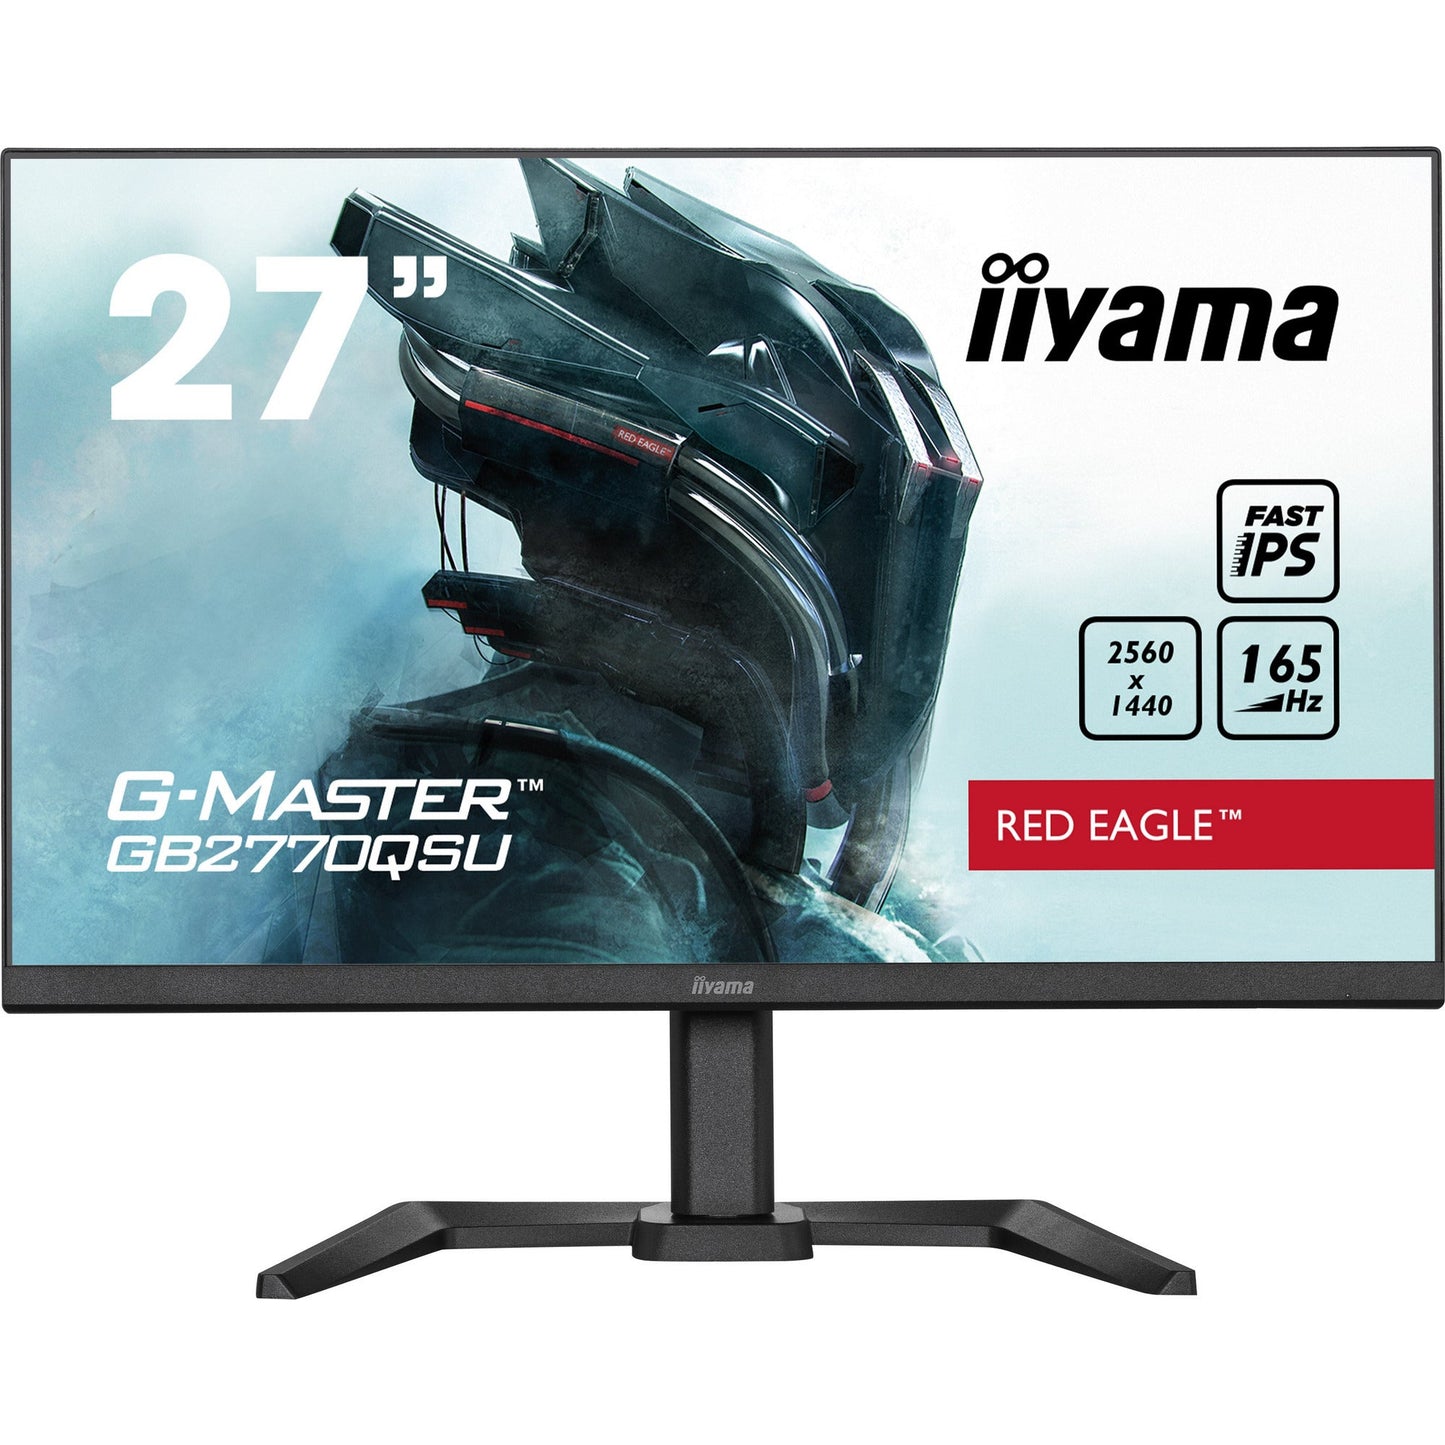 Light Gray iiyama G-Master GB2770QSU-B5 27" Fast IPS WQHD 2560 x 1400 Red Eagle Gaming Monitor